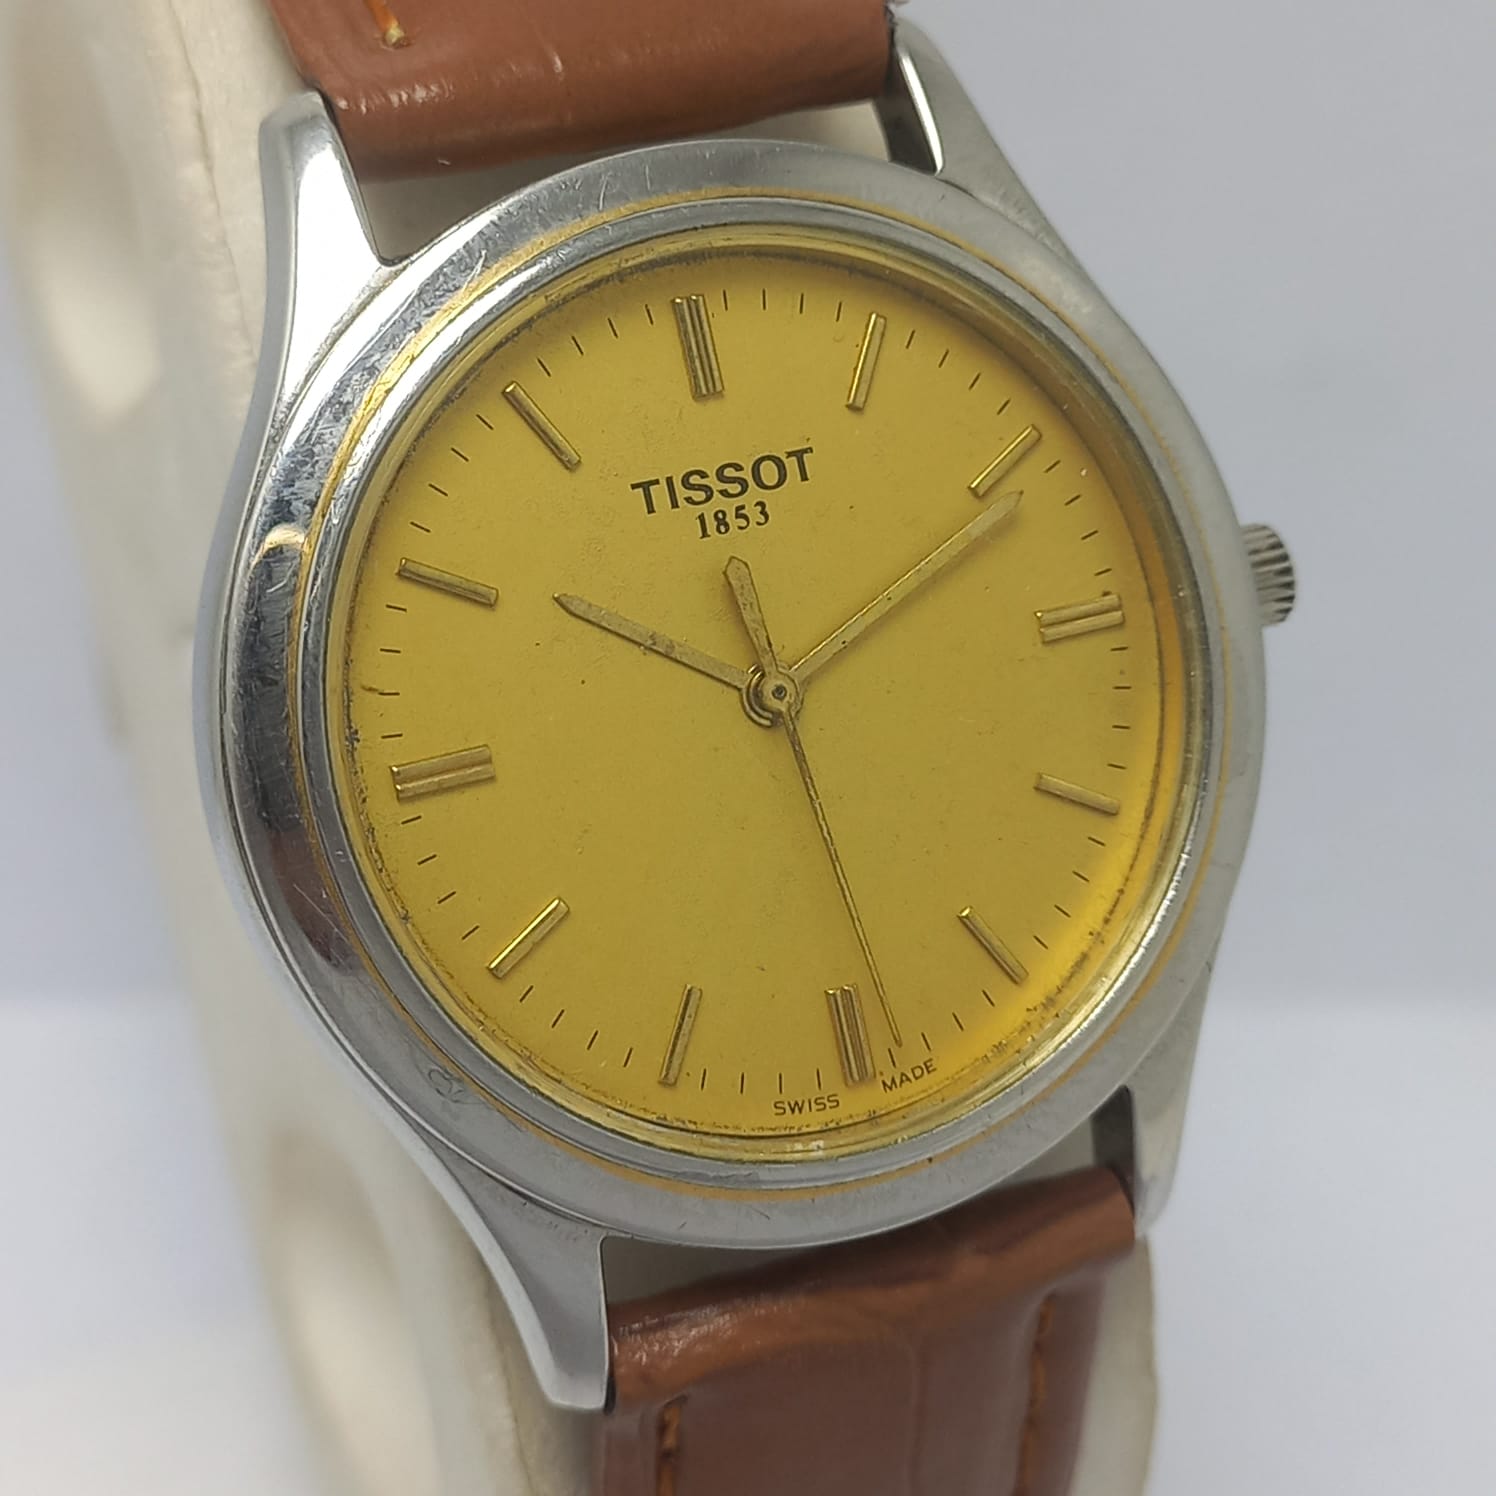 Tissot 1853 J172/272k Quartz Vintage Men's Watch AAH148SGB5 - Watches Pool